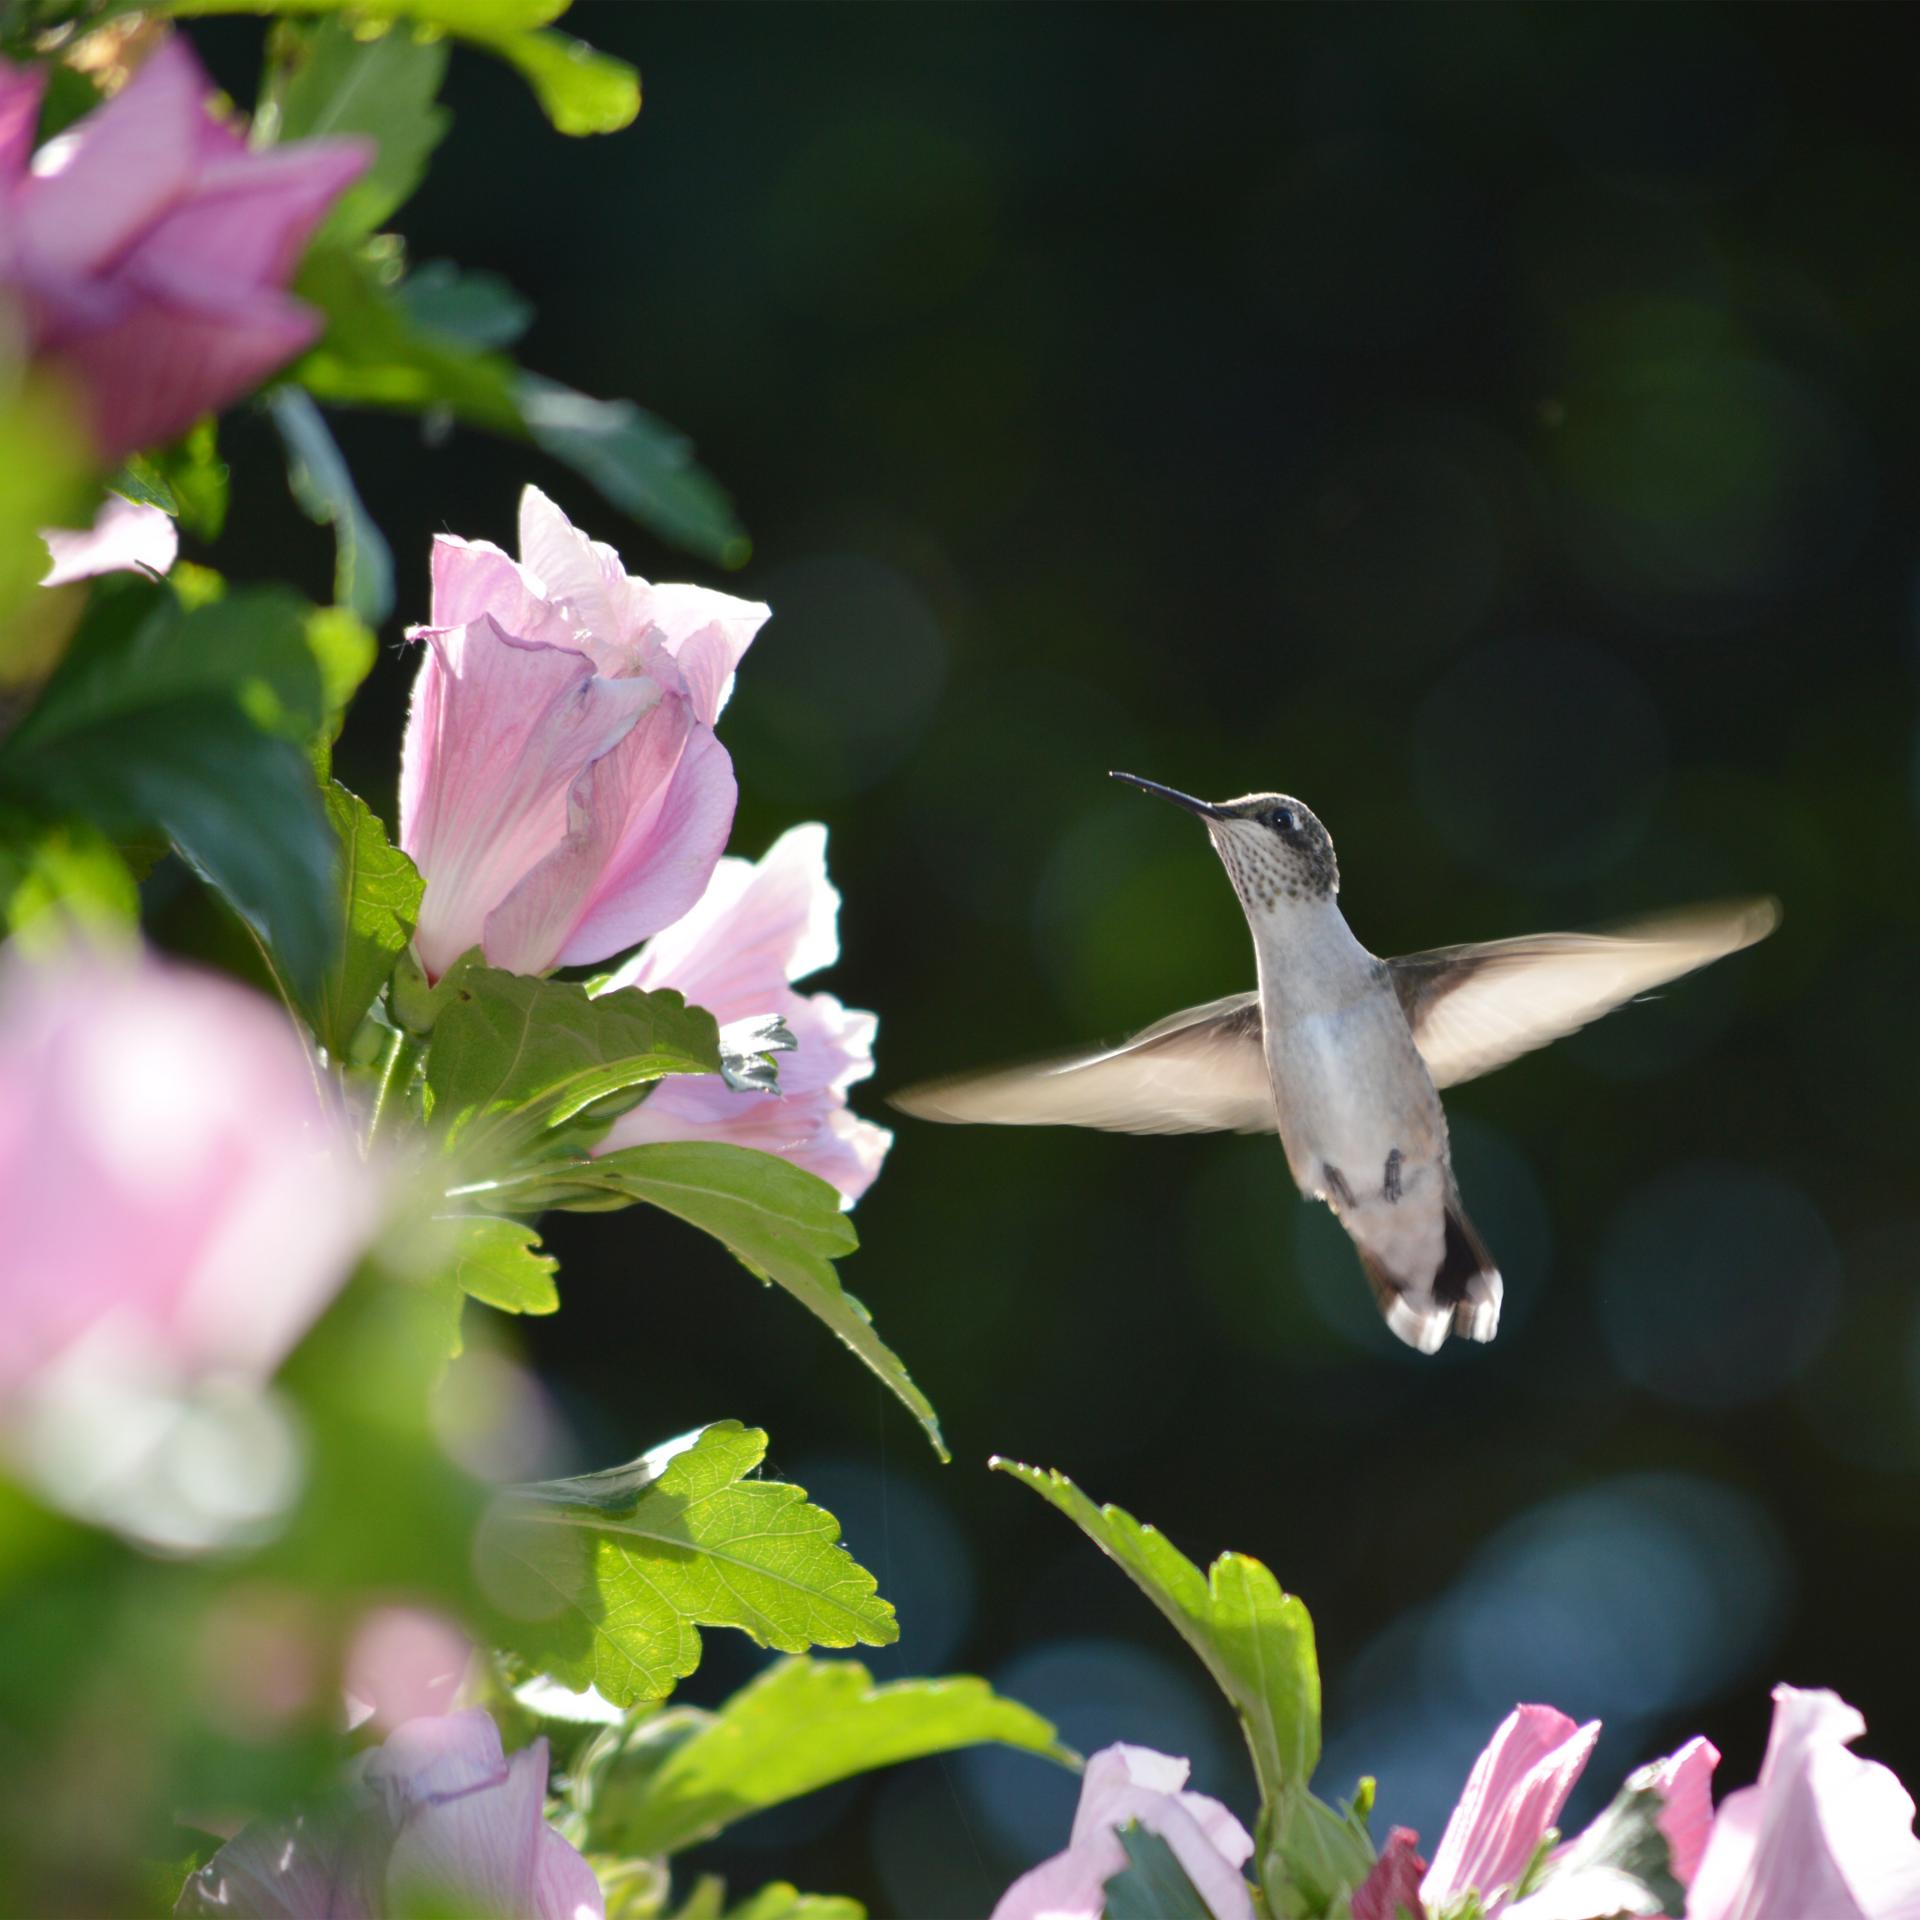 A hummingbird at a local nature center